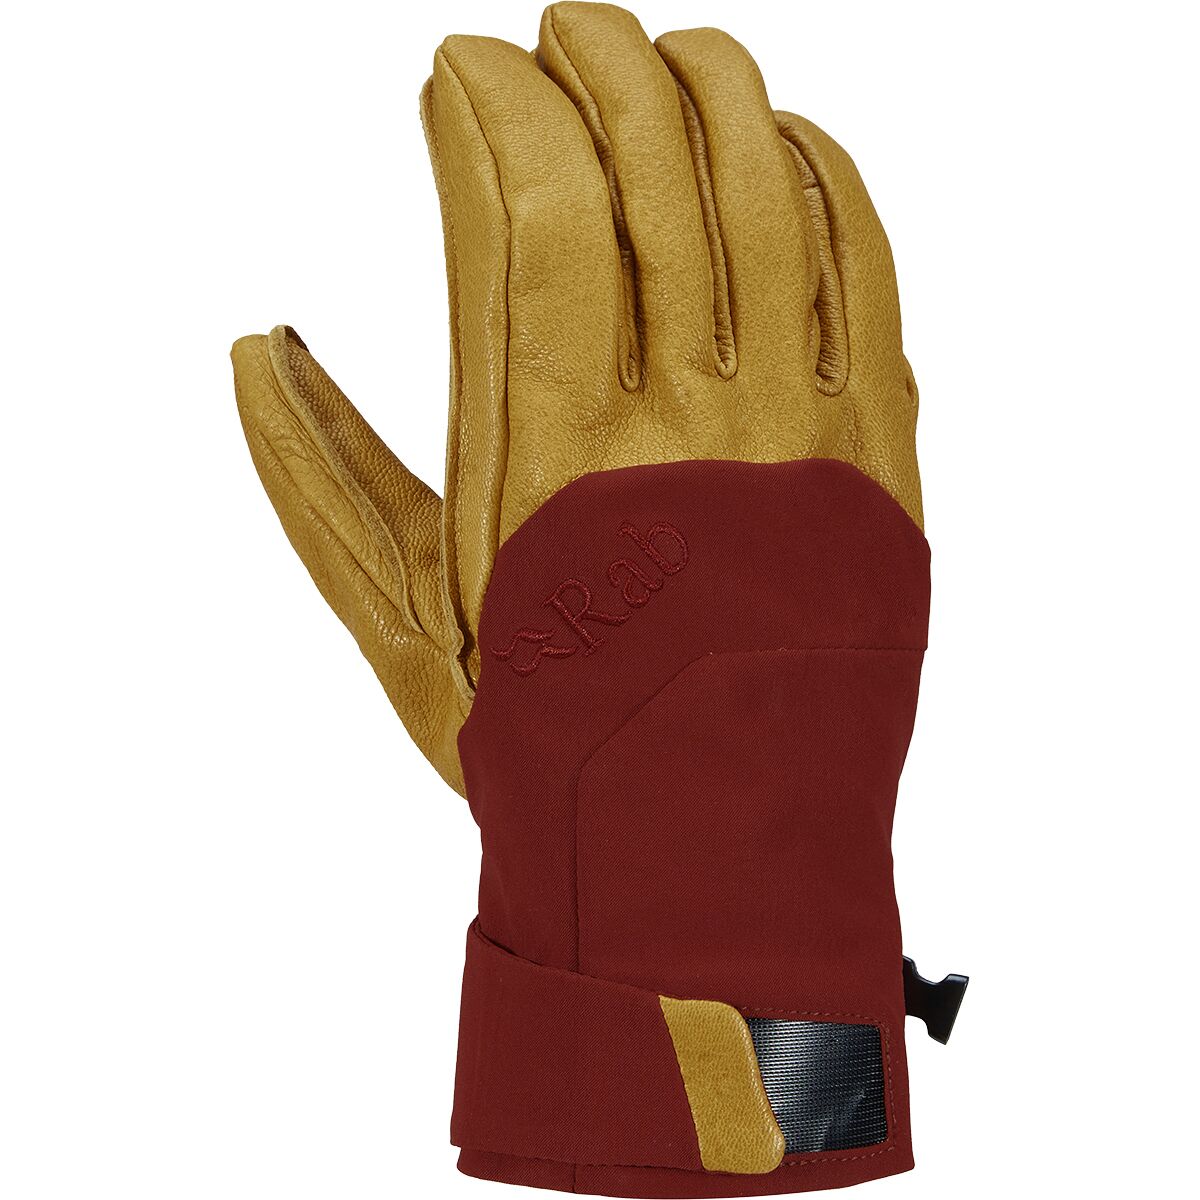 Rab Khroma Tour GORE-TEX INFINIUM Glove - Men's Oxblood Red